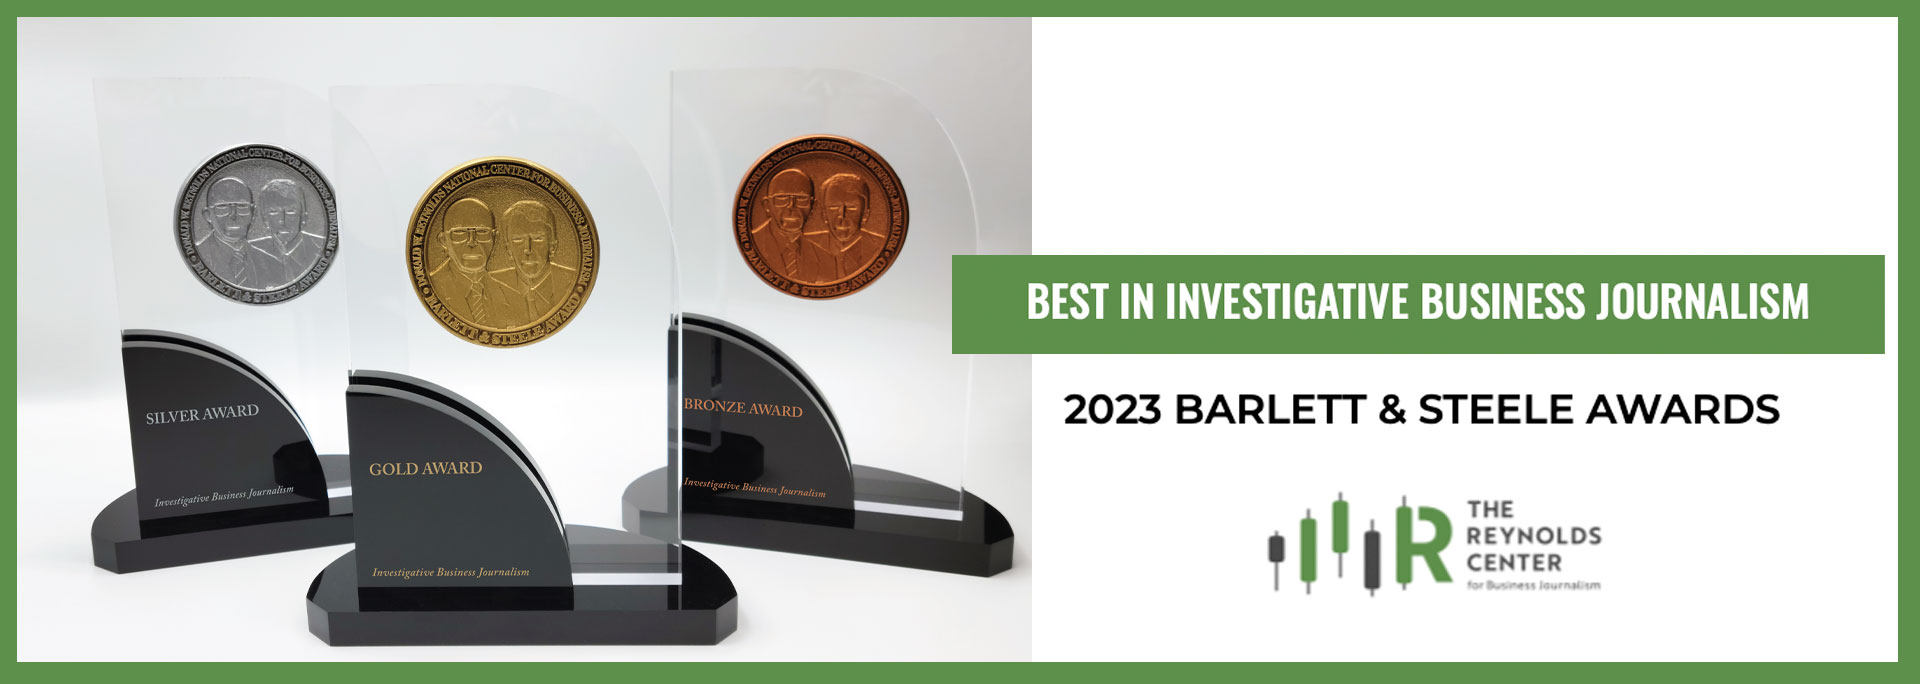 2023 Barlett and Steele Awards for Best Investigative Business Journalism